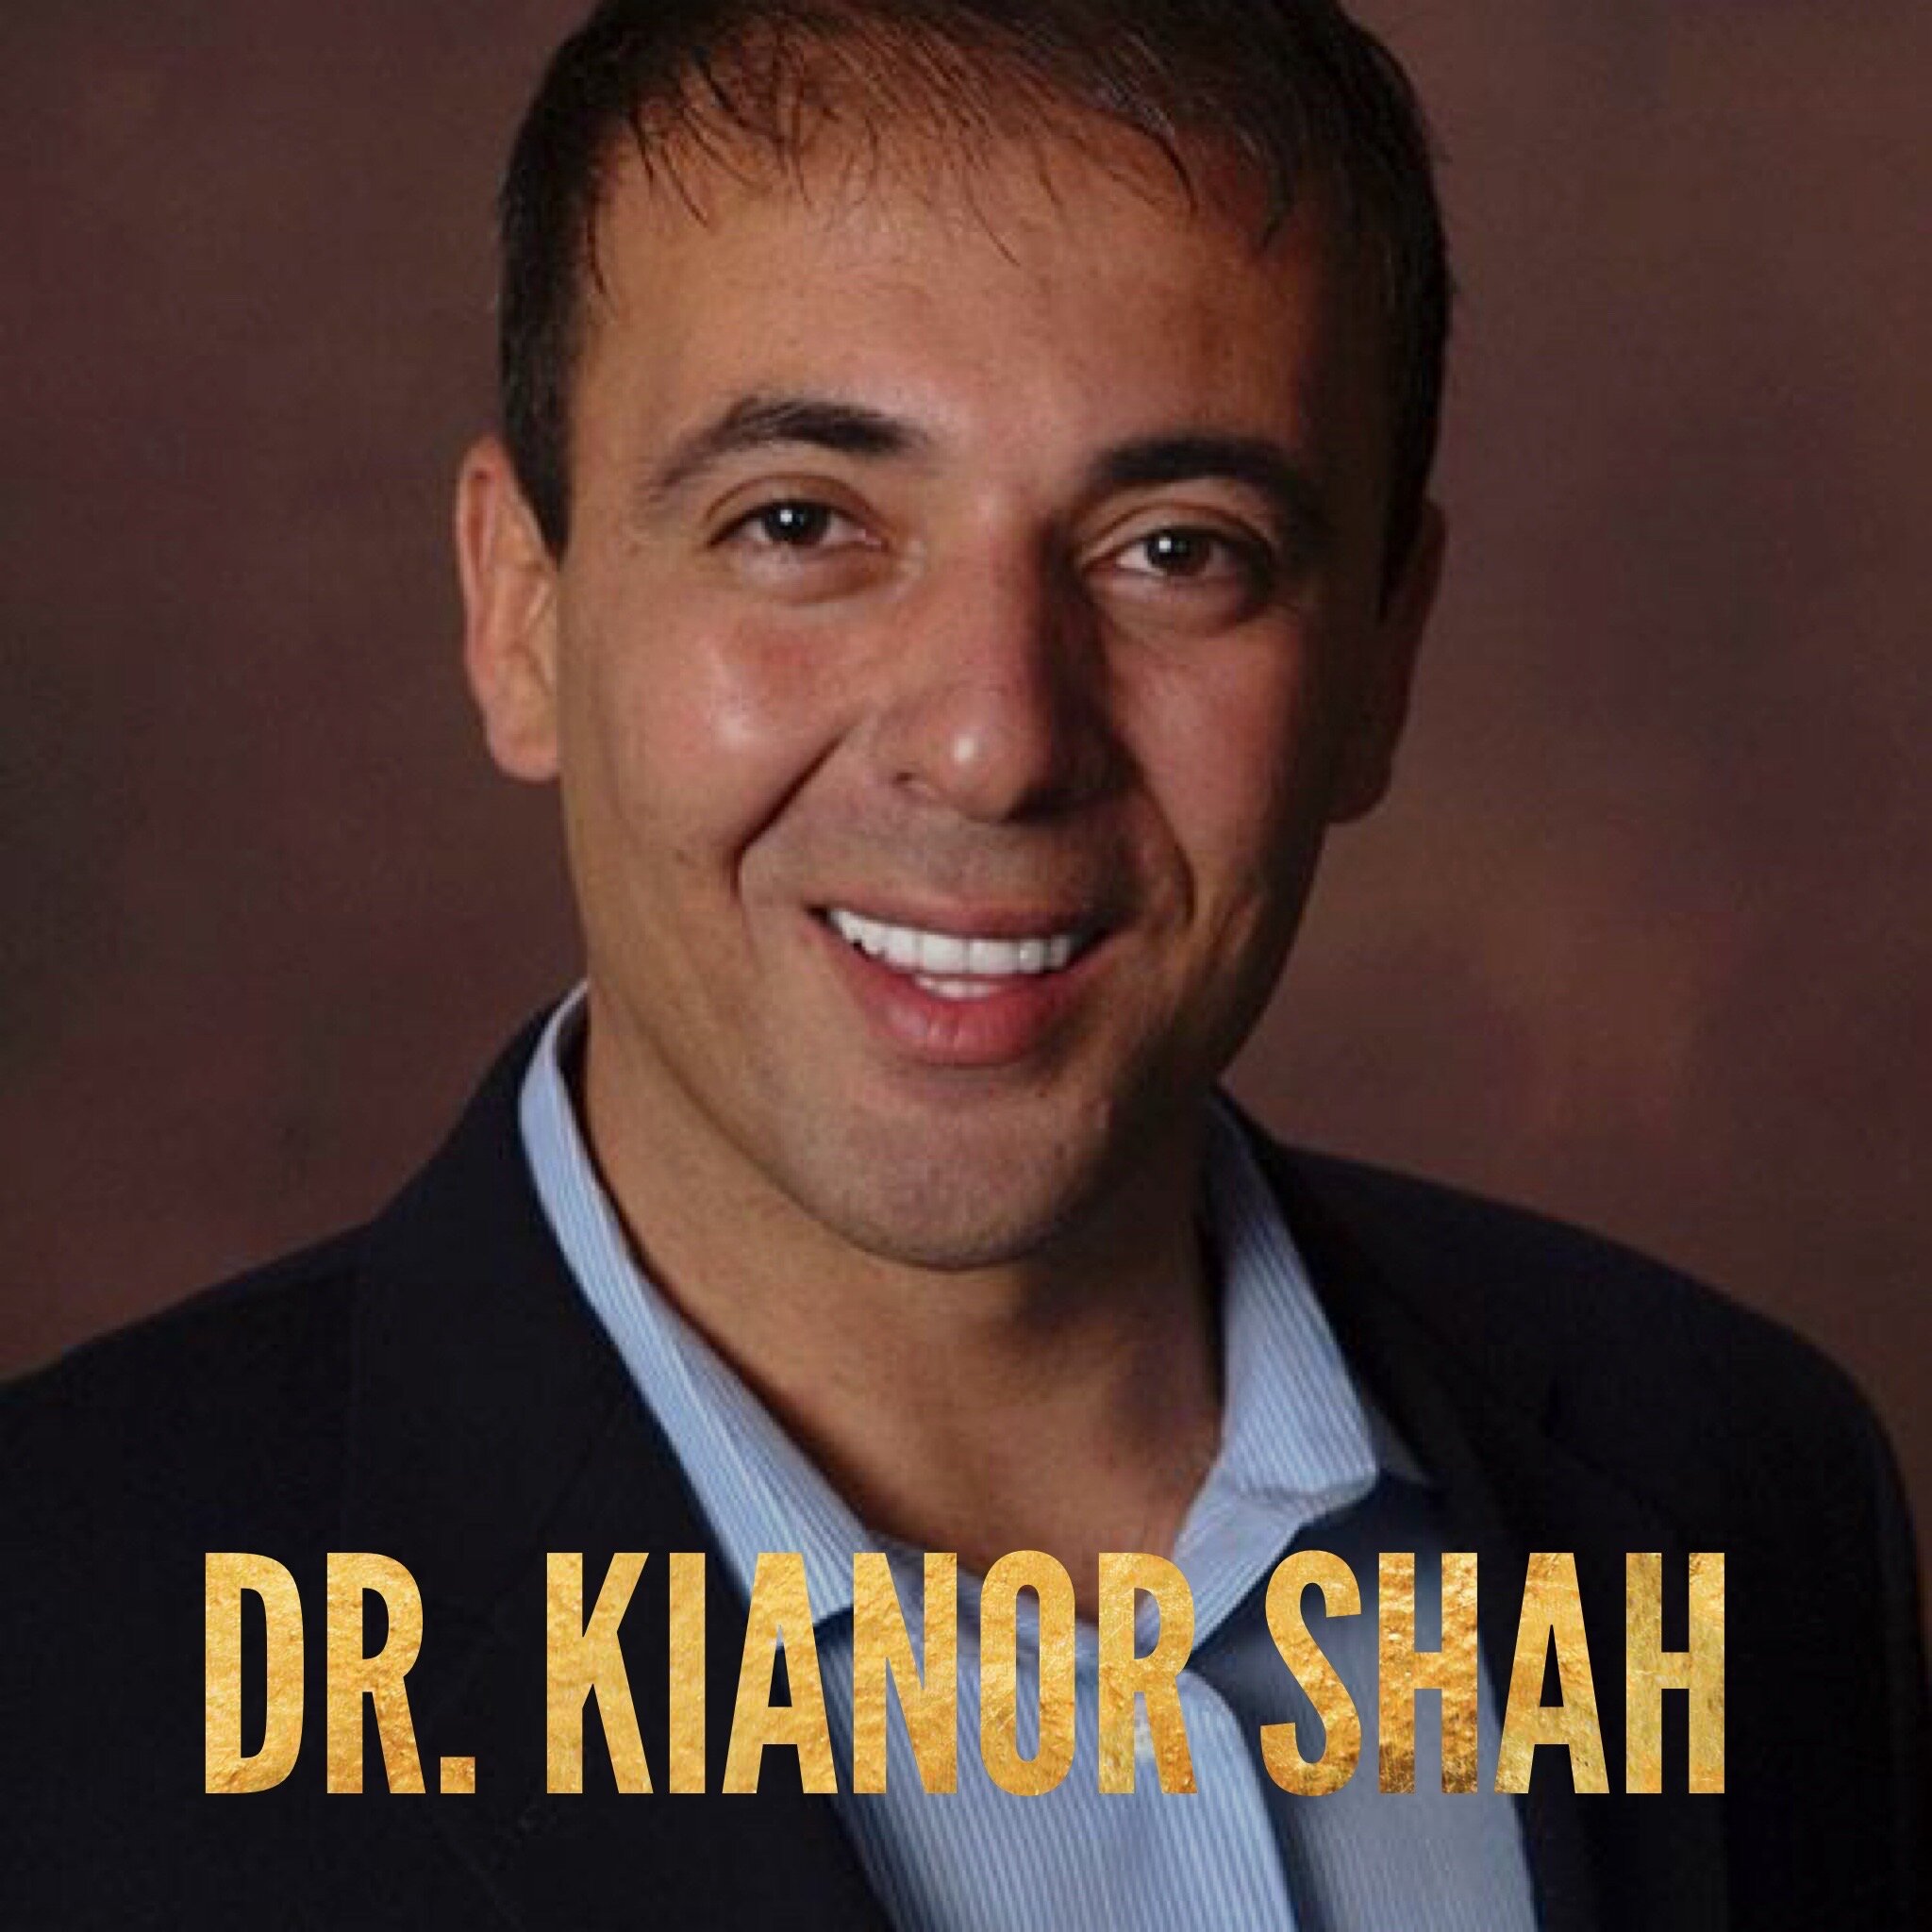 Dr. Kianor Shah 2.JPG